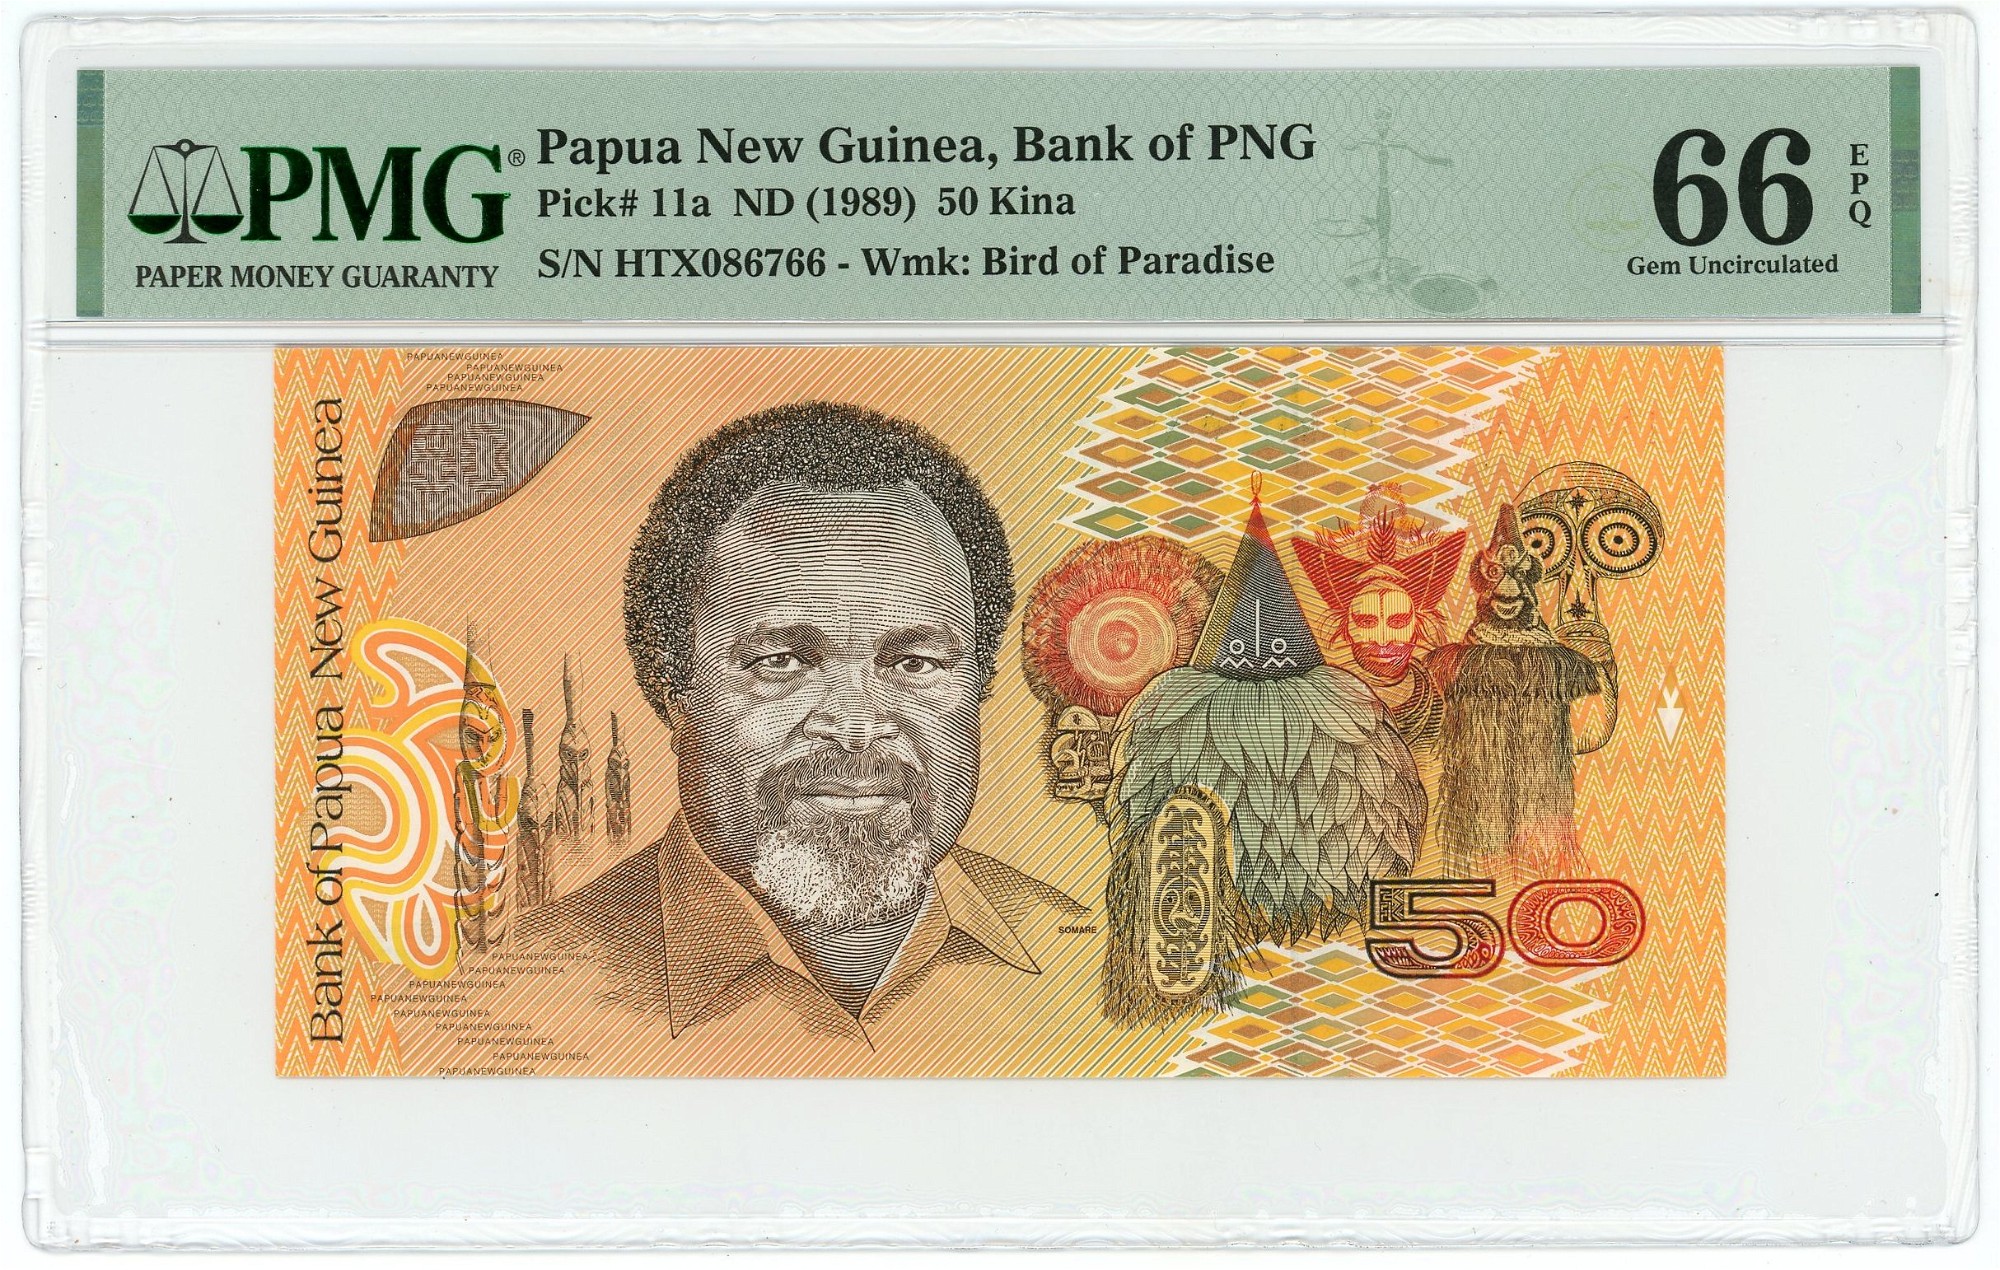 New Zealand 1 Dollar 1977 - 1981 (ND) PMG 65 EPQ Gem UNC | Katz 